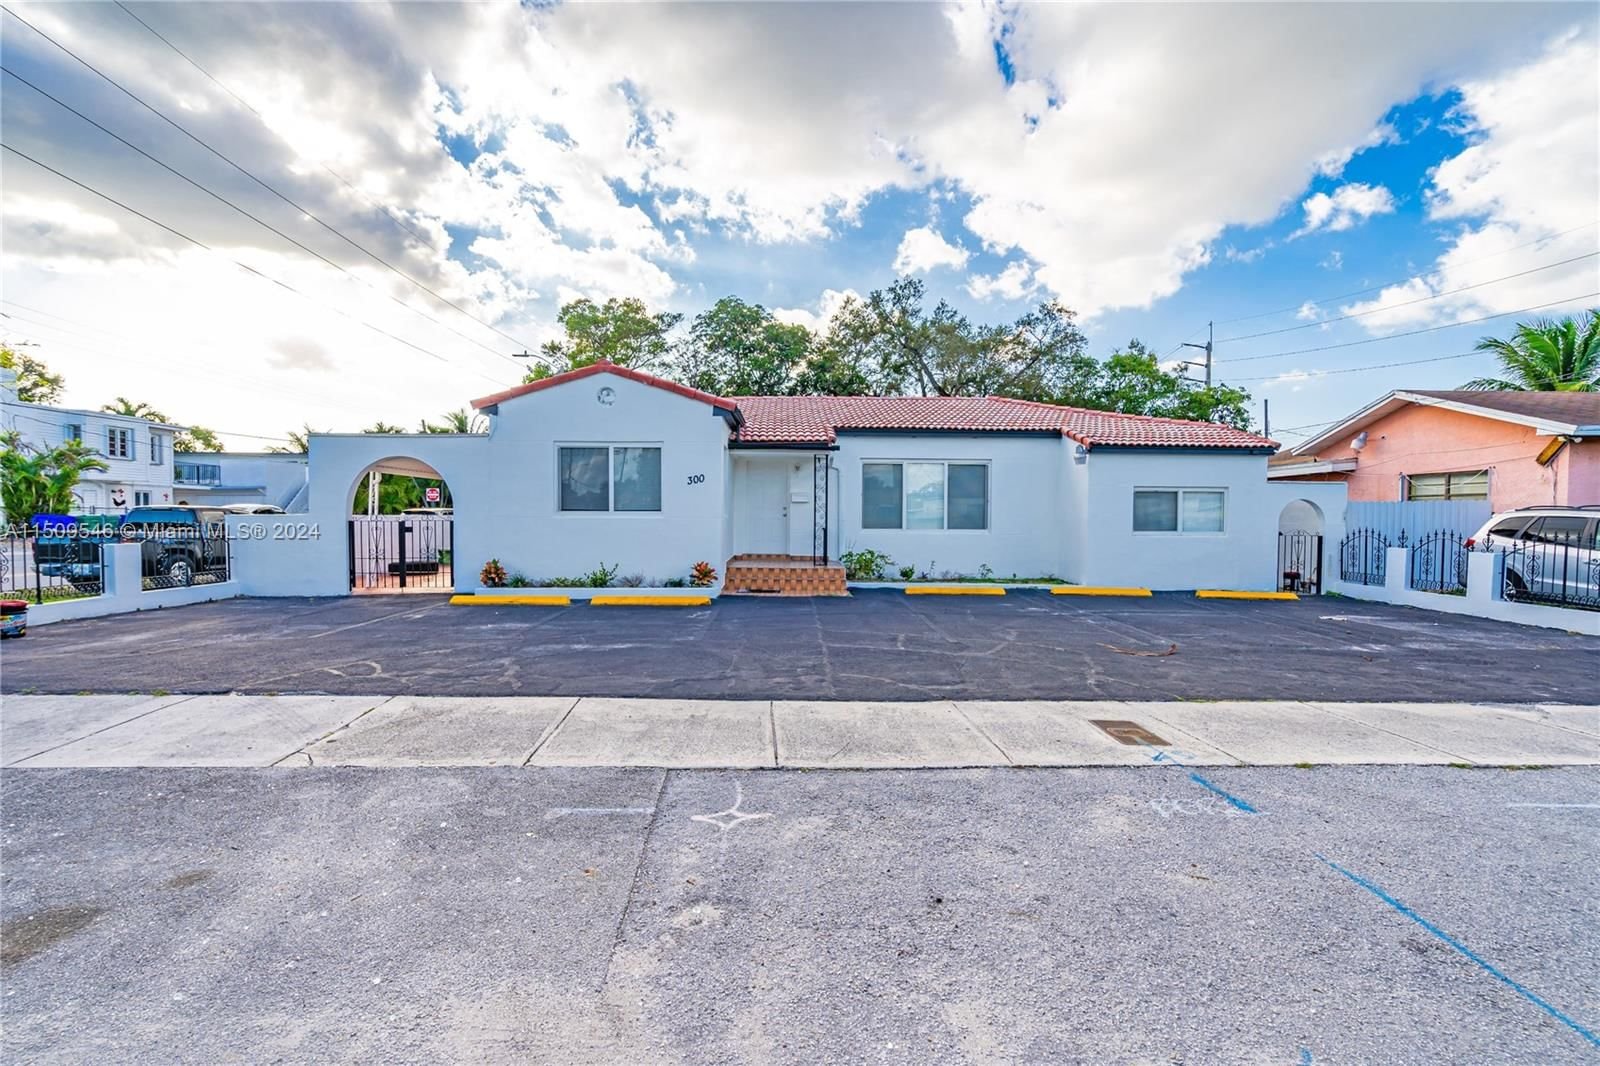 Real estate property located at 300 45th Ave, Miami-Dade County, NEW LIFE SUB, Miami, FL